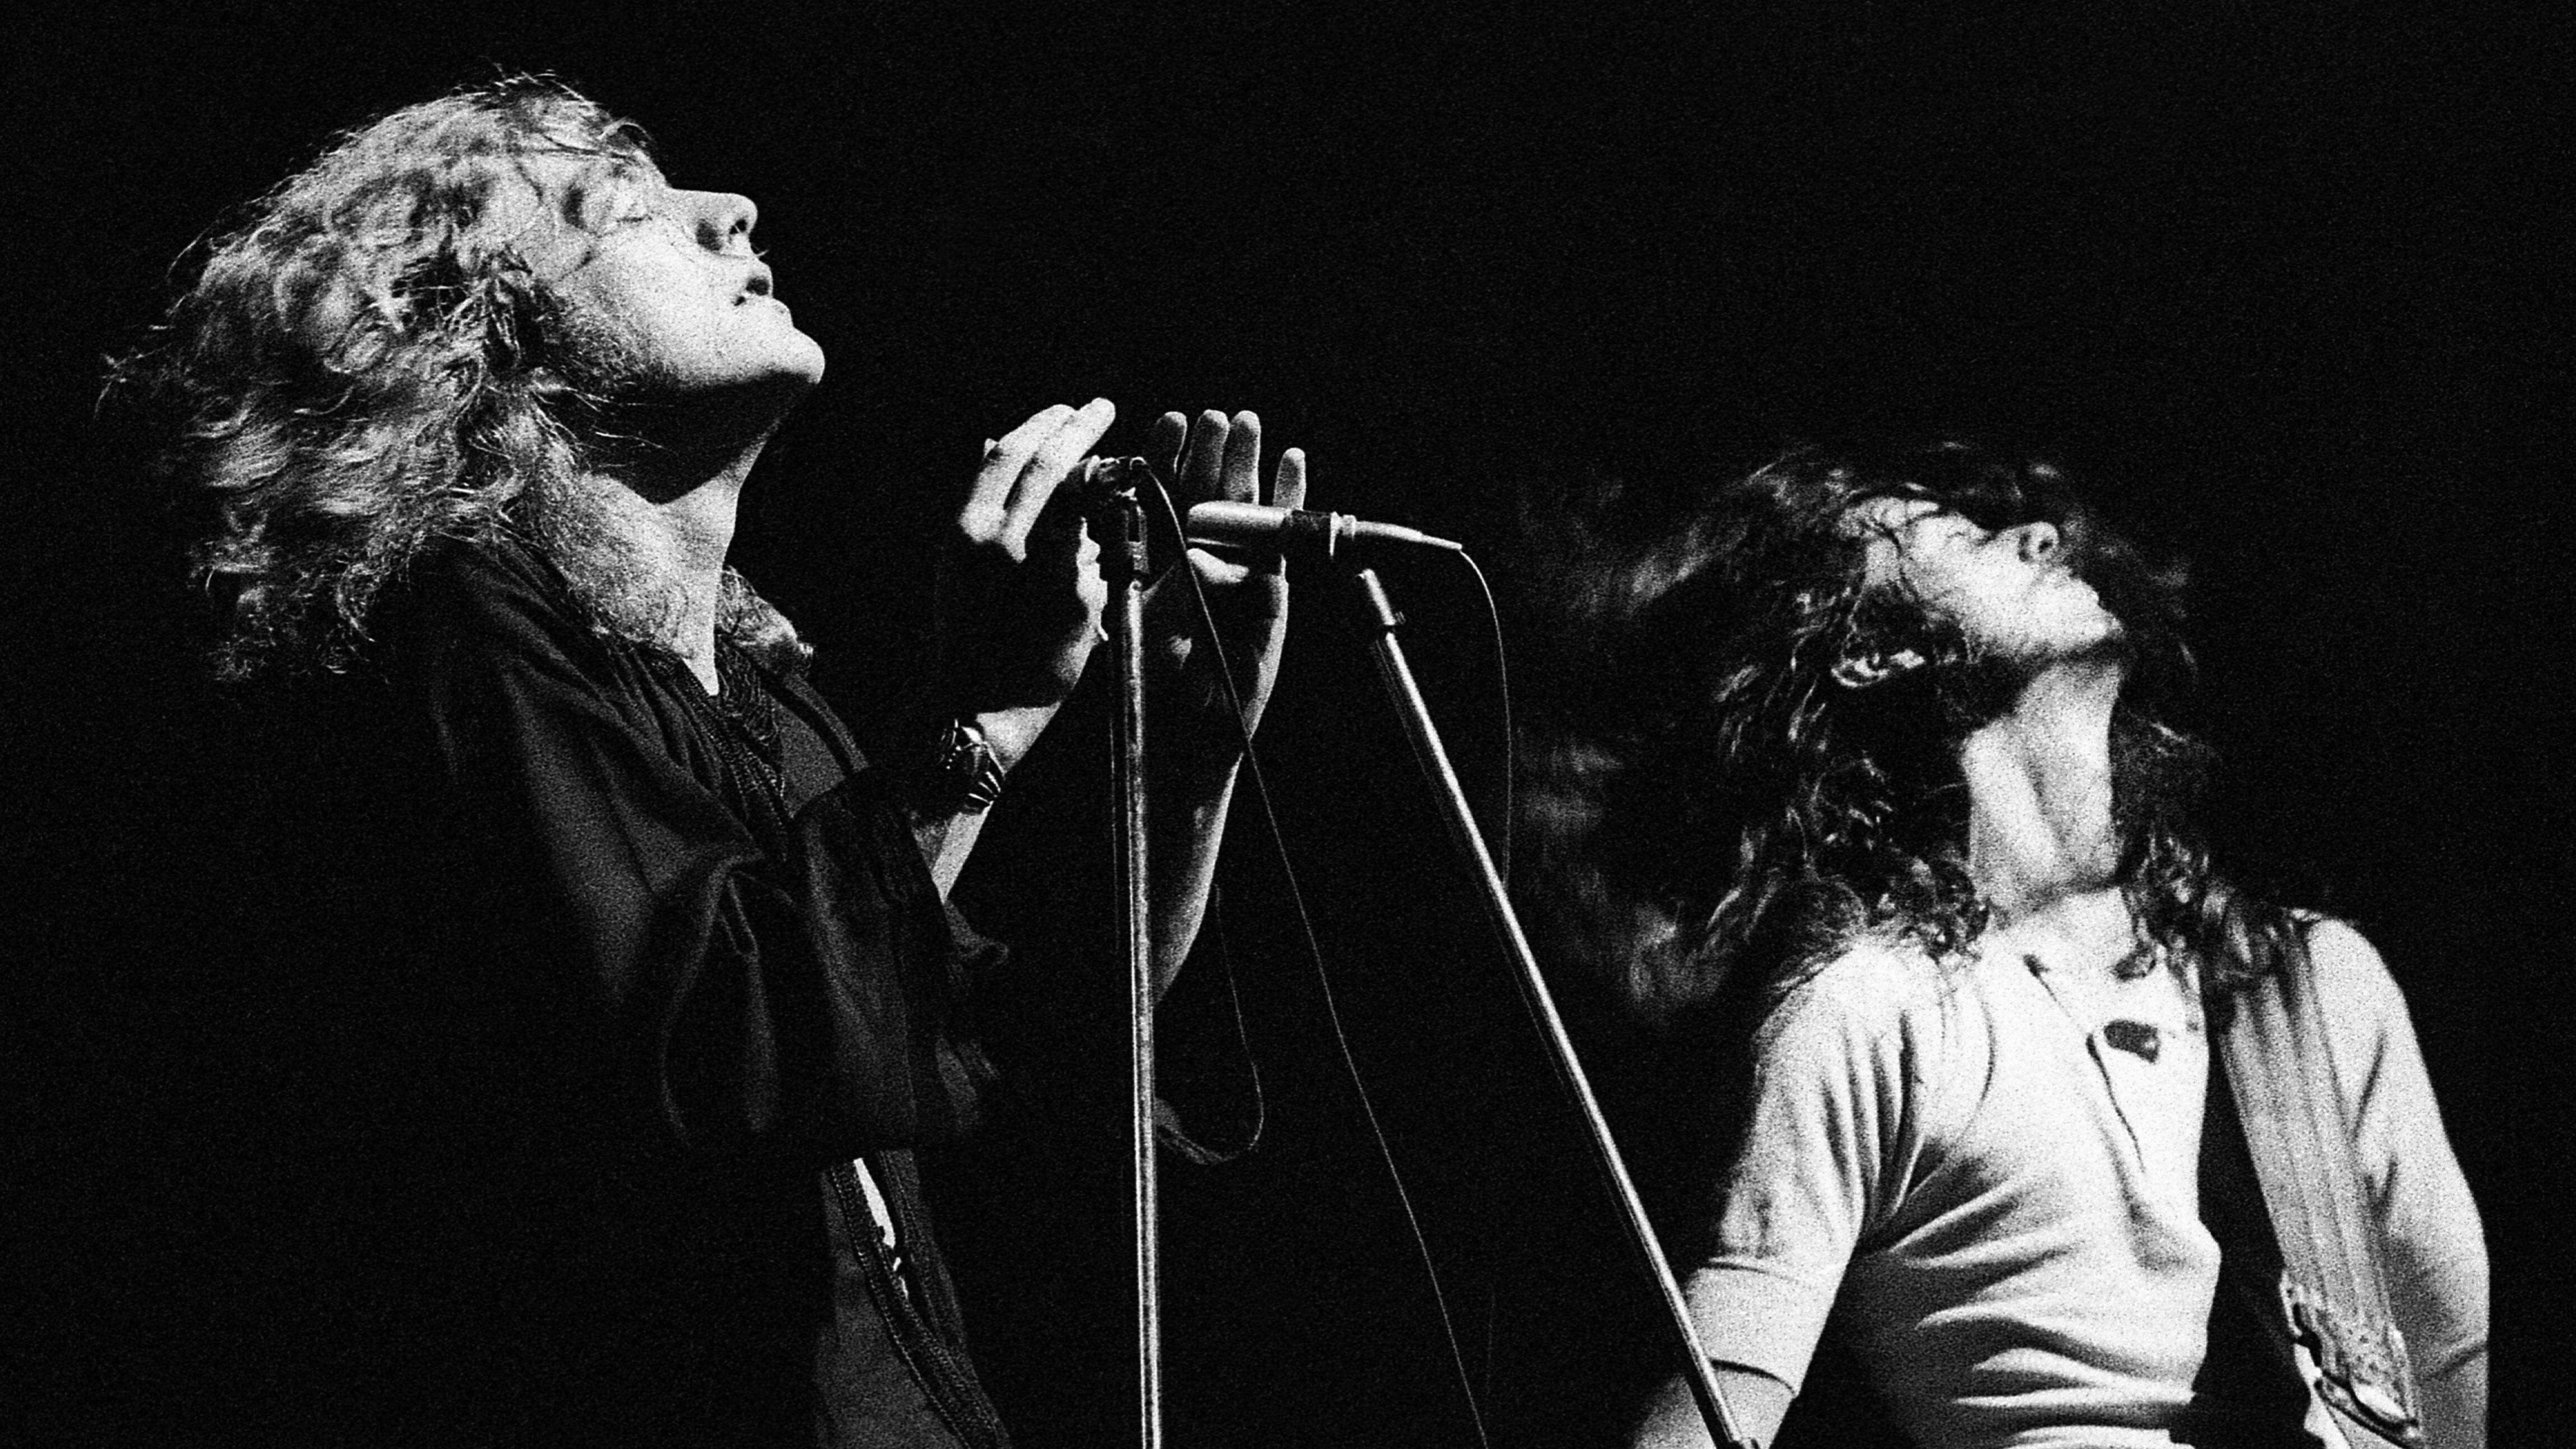 Lotta Love — Led Zeppelin's priapic has tangled history